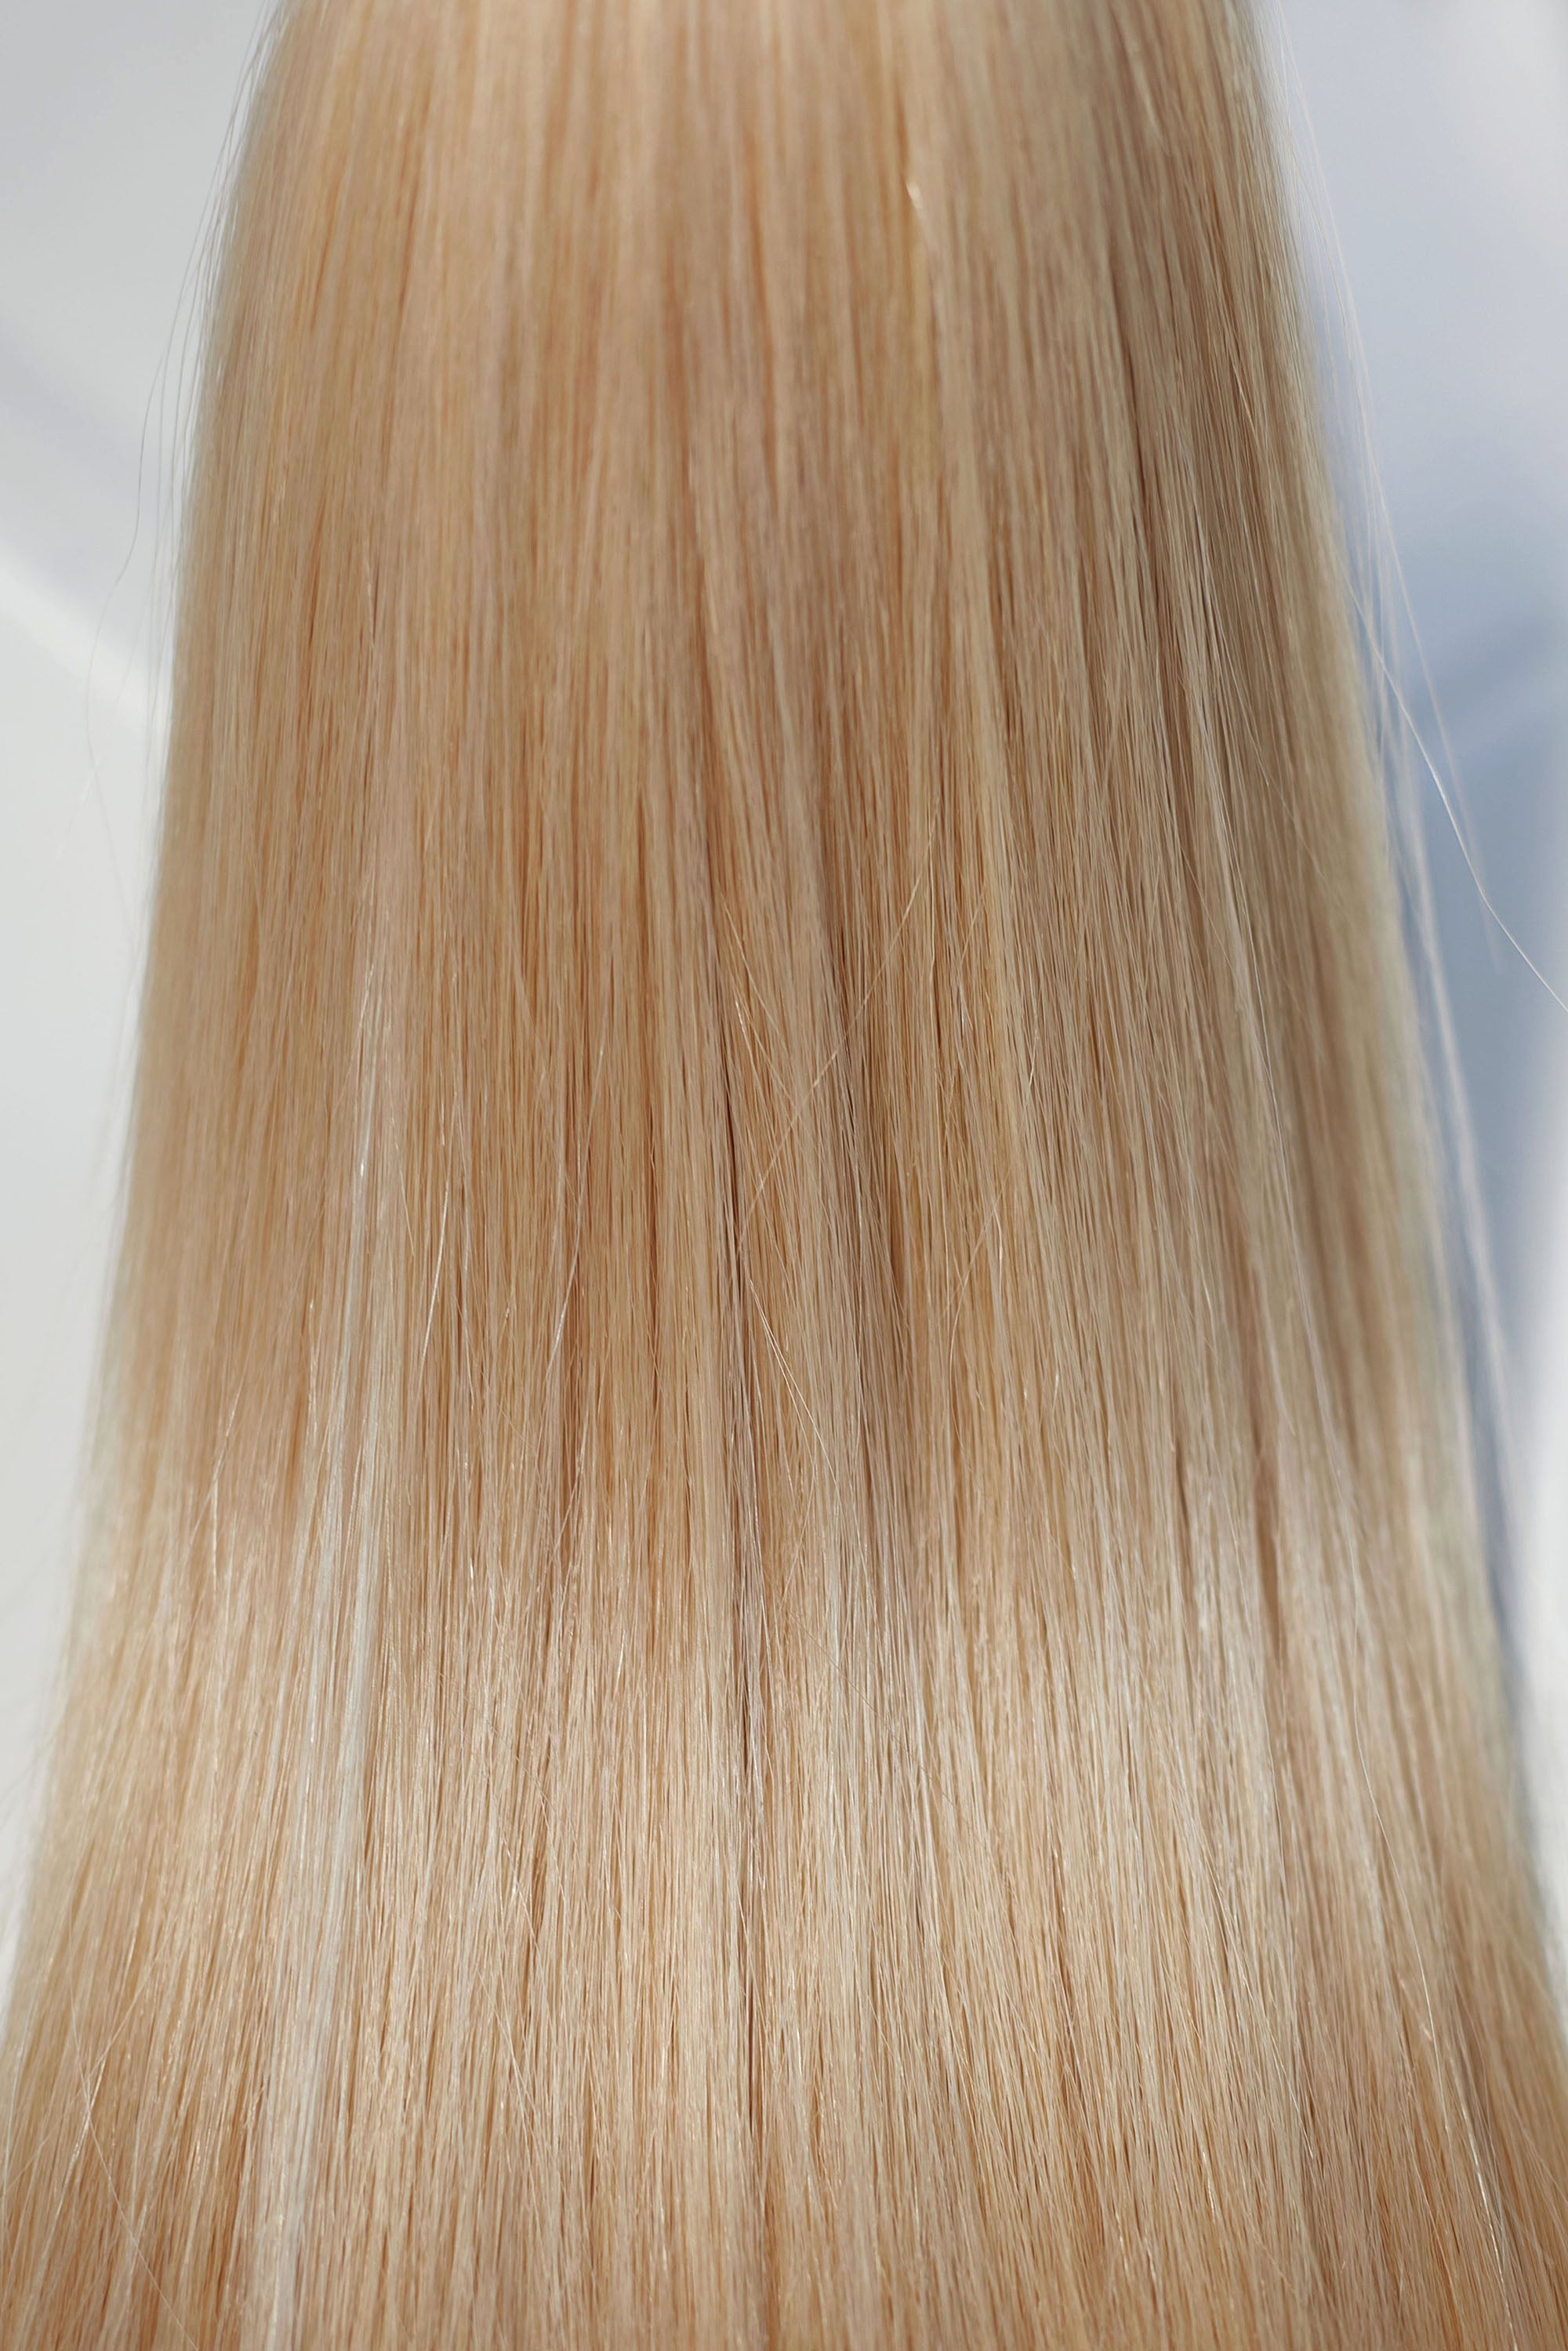 Behair professional Keratin Tip "Premium" 28" (70cm) Natural Straight Light Gold Blond #24 - 25g (Micro - 0.5g each pcs) hair extensions